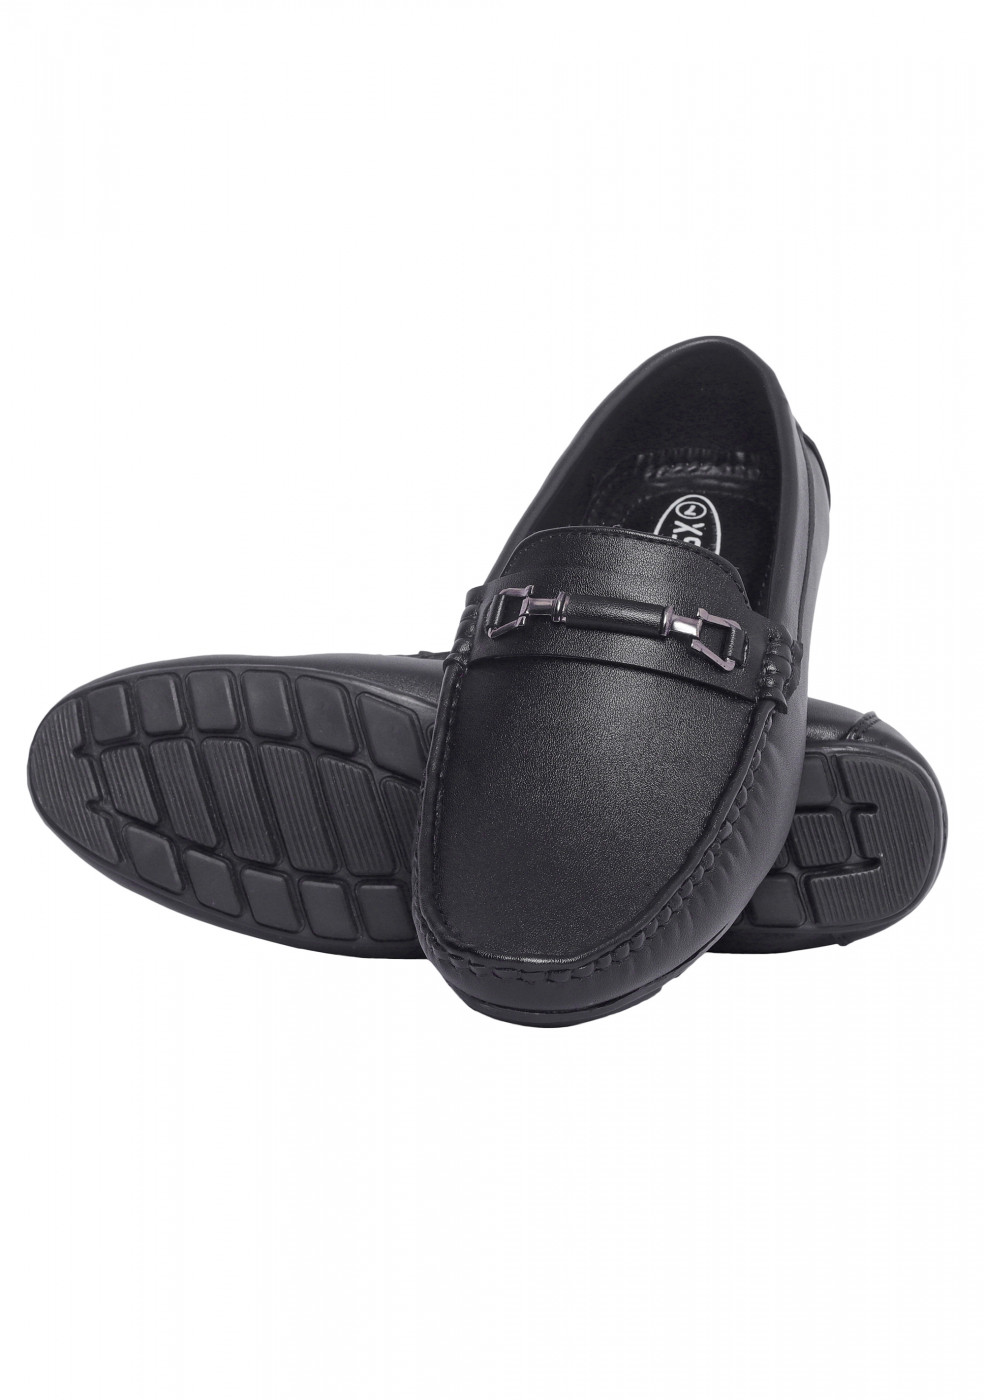 XSTOM Comfortable Black Loafers For Men